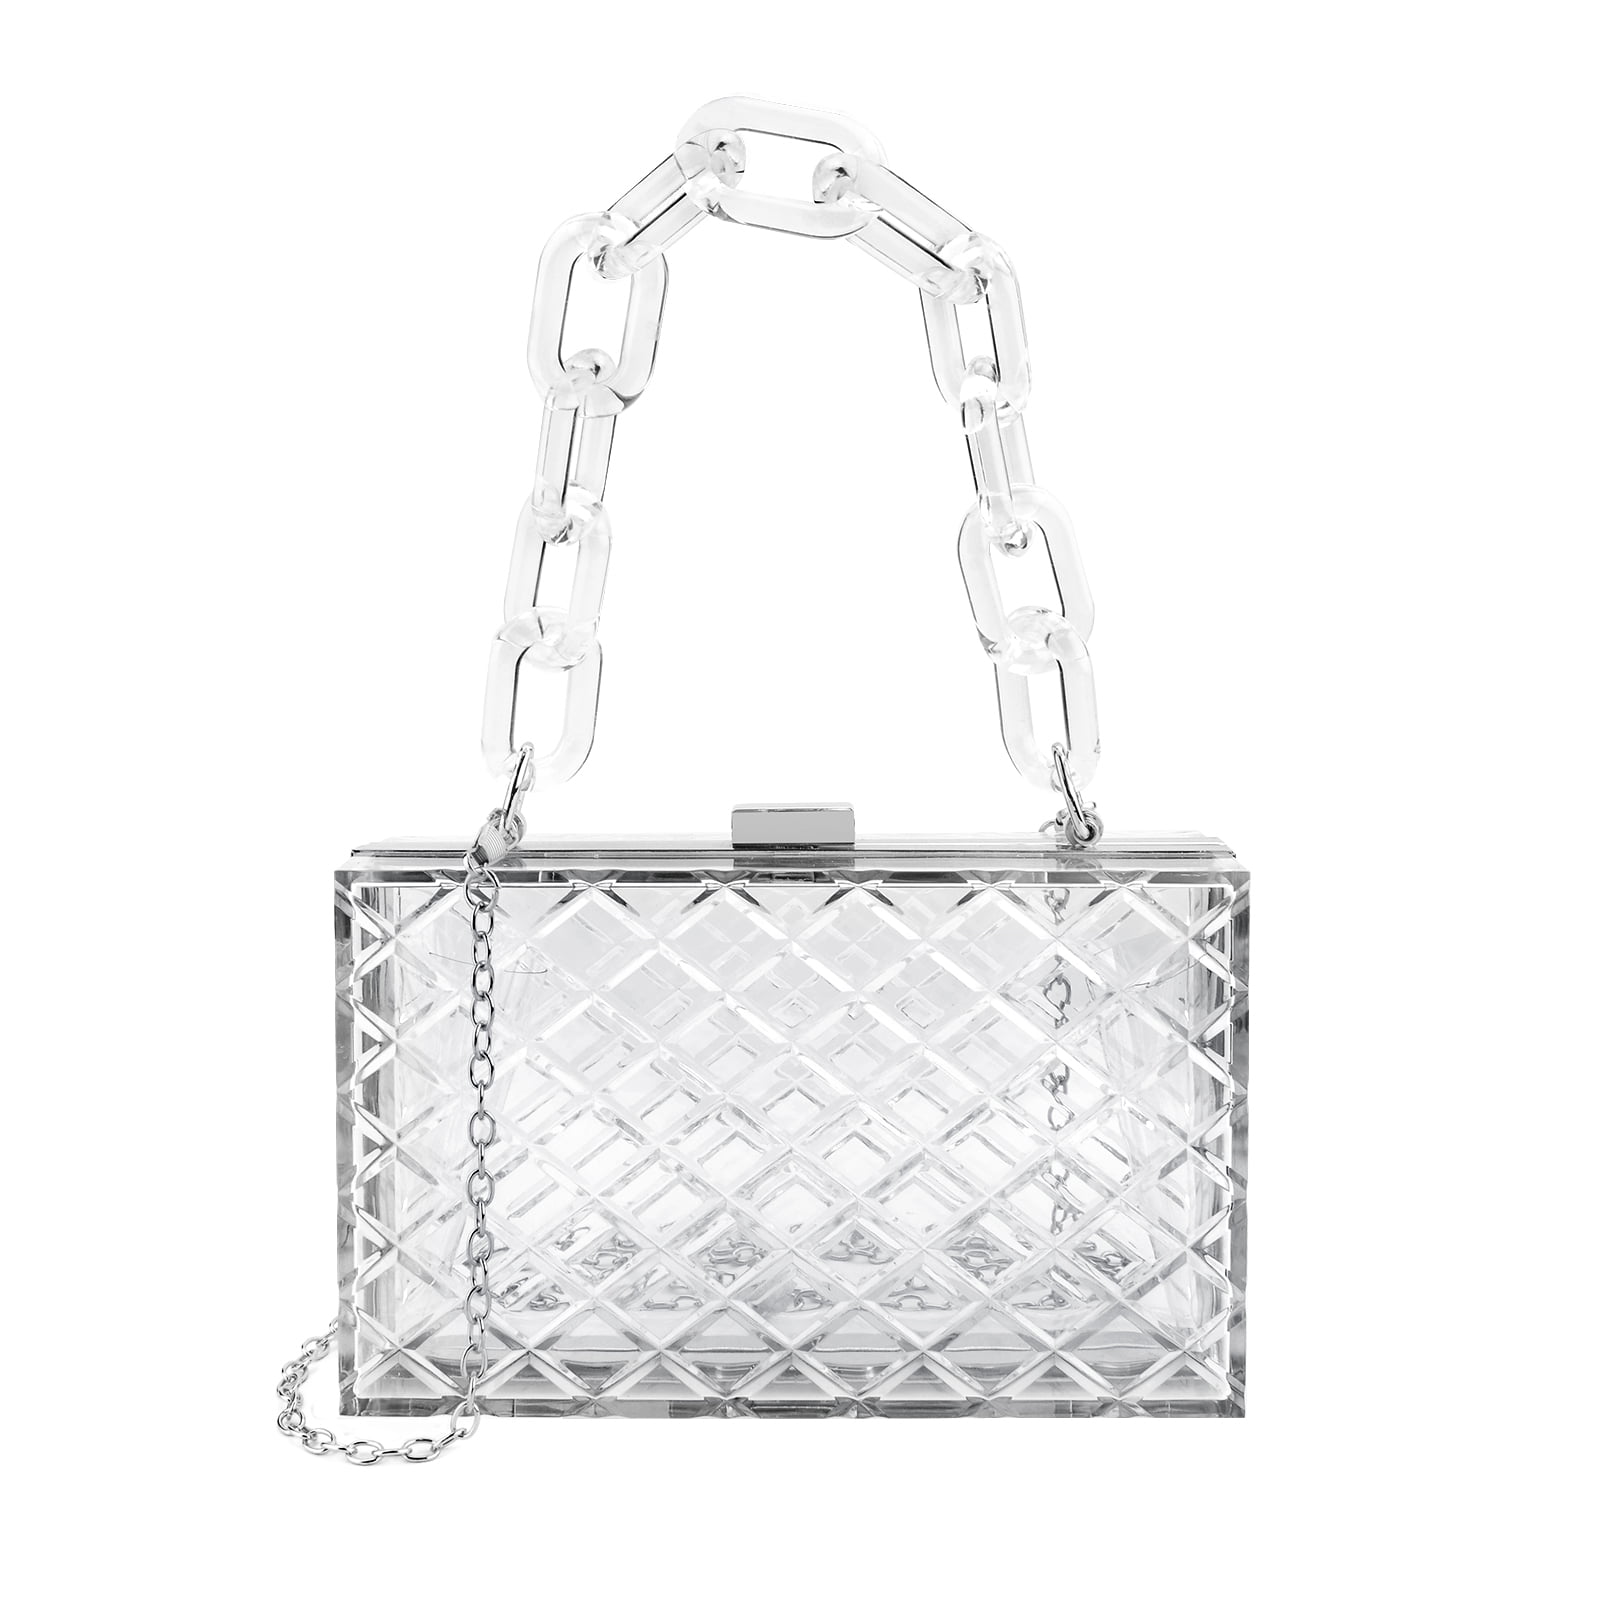 Women Cute Transparent Clear See Through Box Clutch Acrylic Evening Handbag  Cross-Body Purse Bag (Pink) : Amazon.in: Fashion